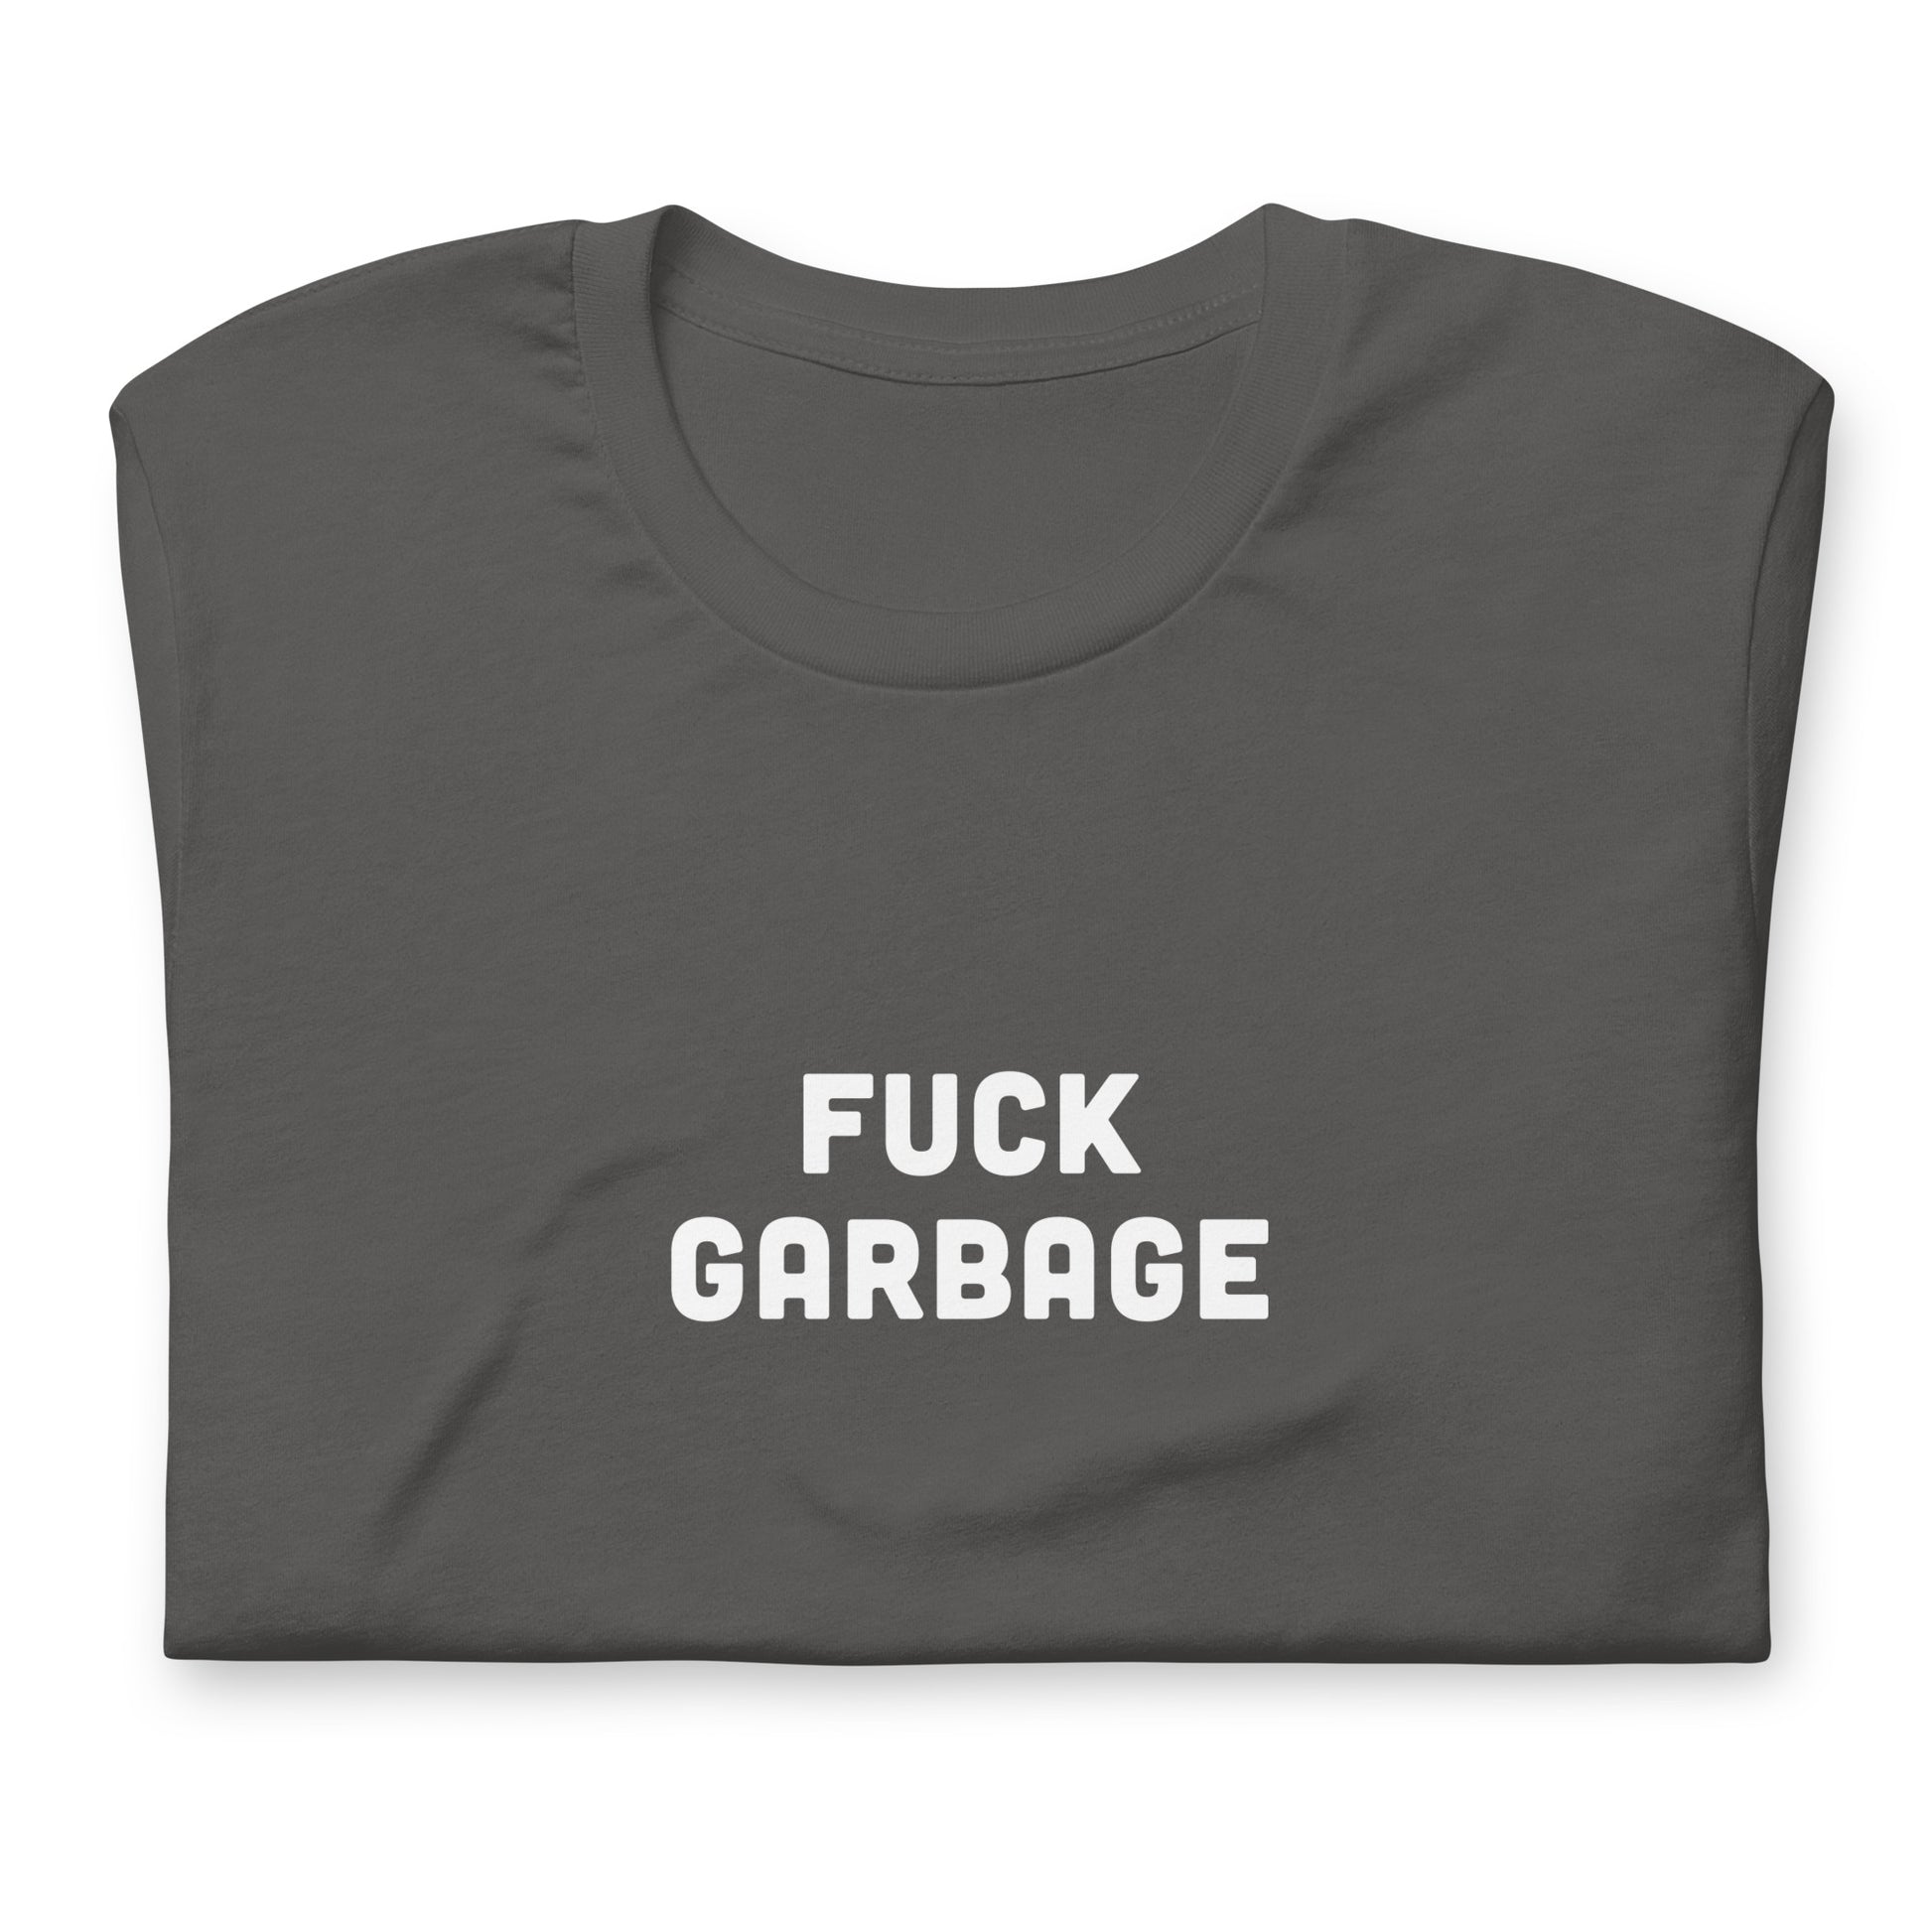 Fuck Garbage T-Shirt Size XL Color Black